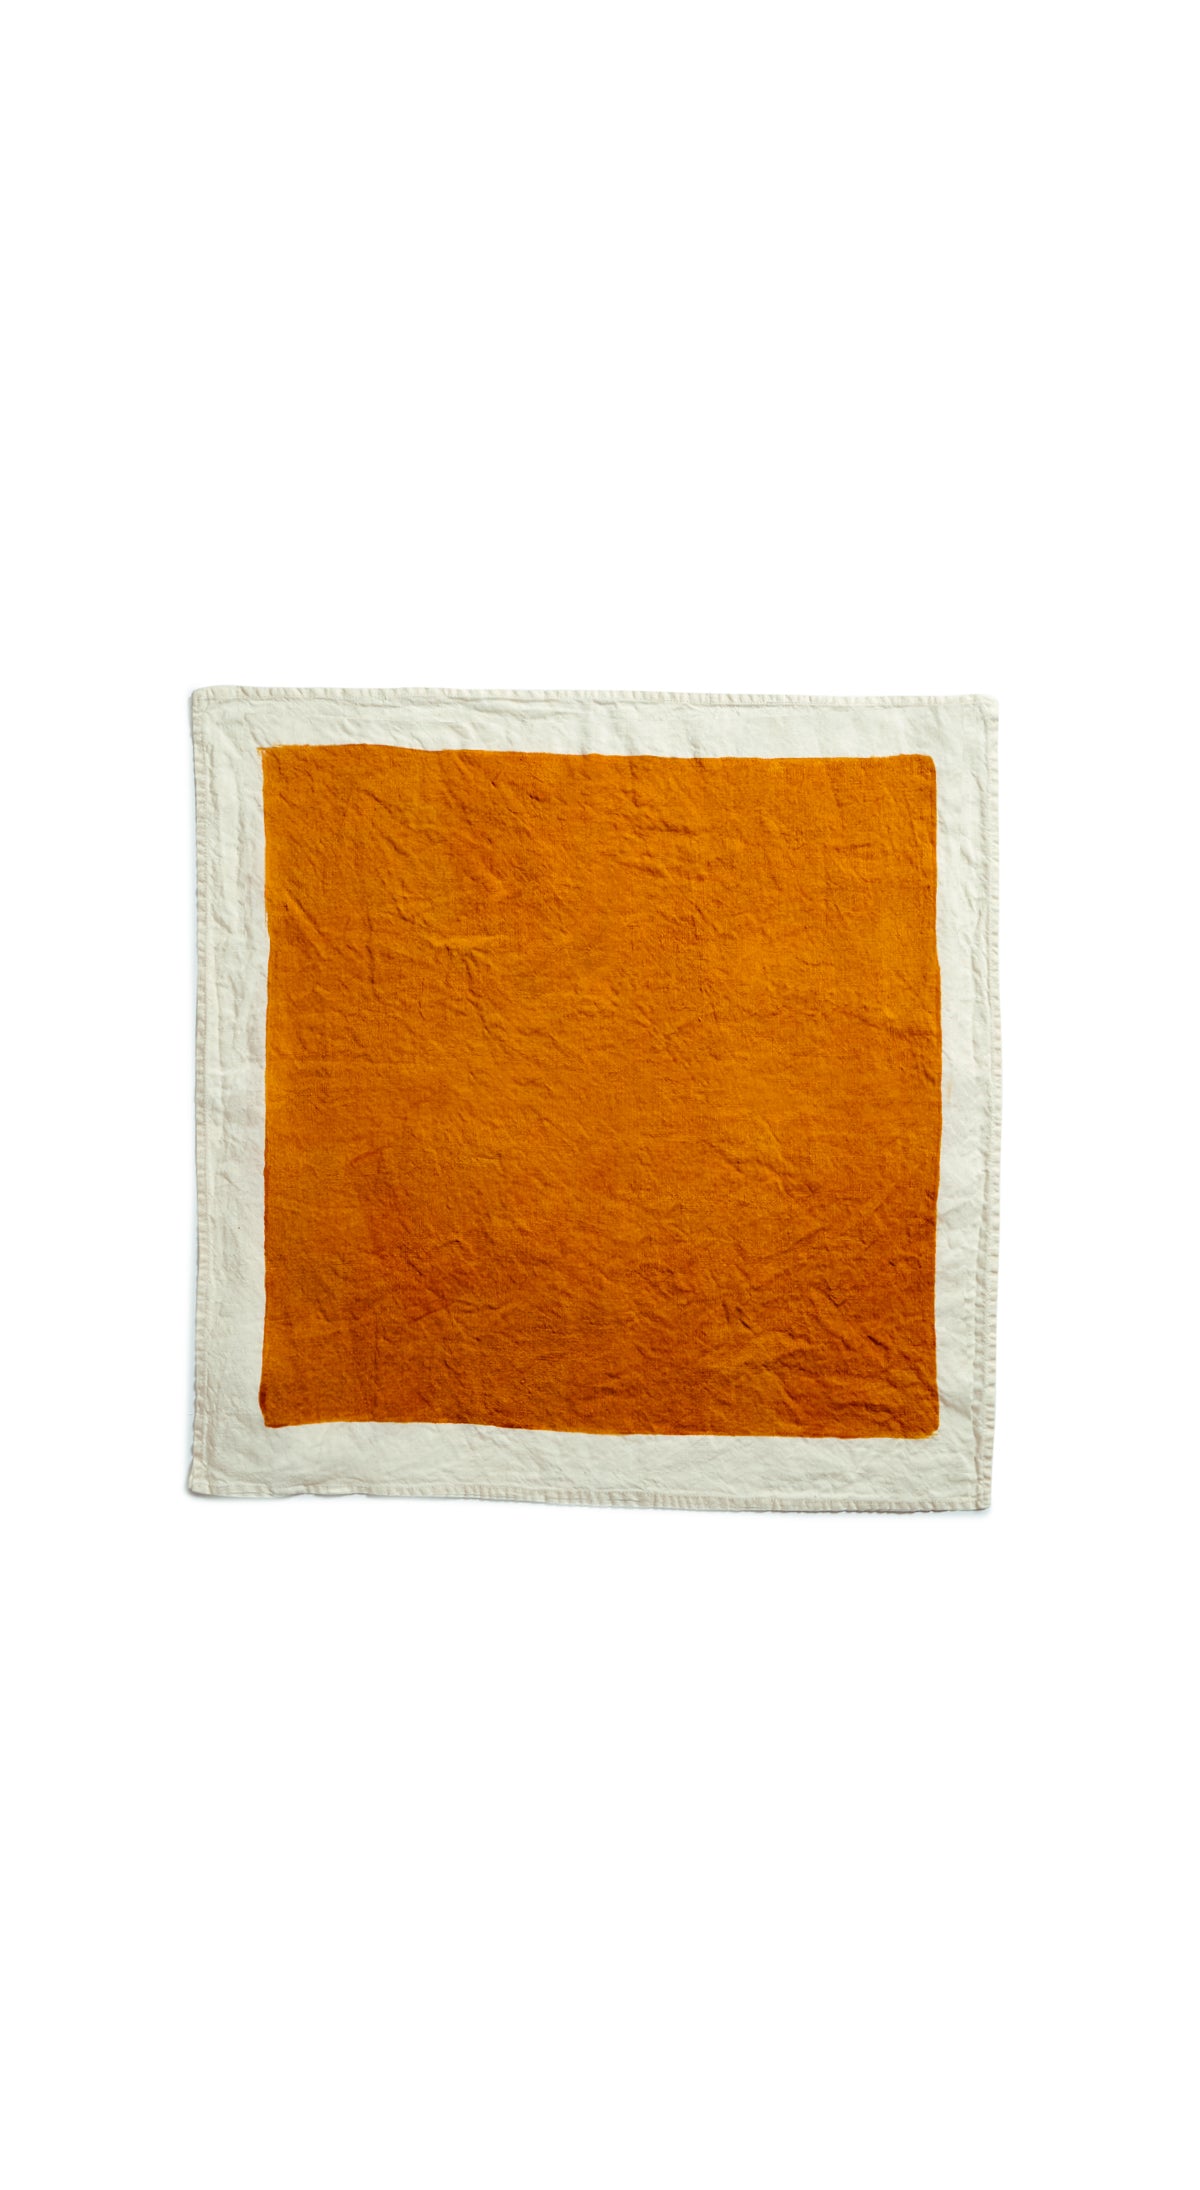 Full Field Linen Napkin in Mustard Yellow, 50x50cm